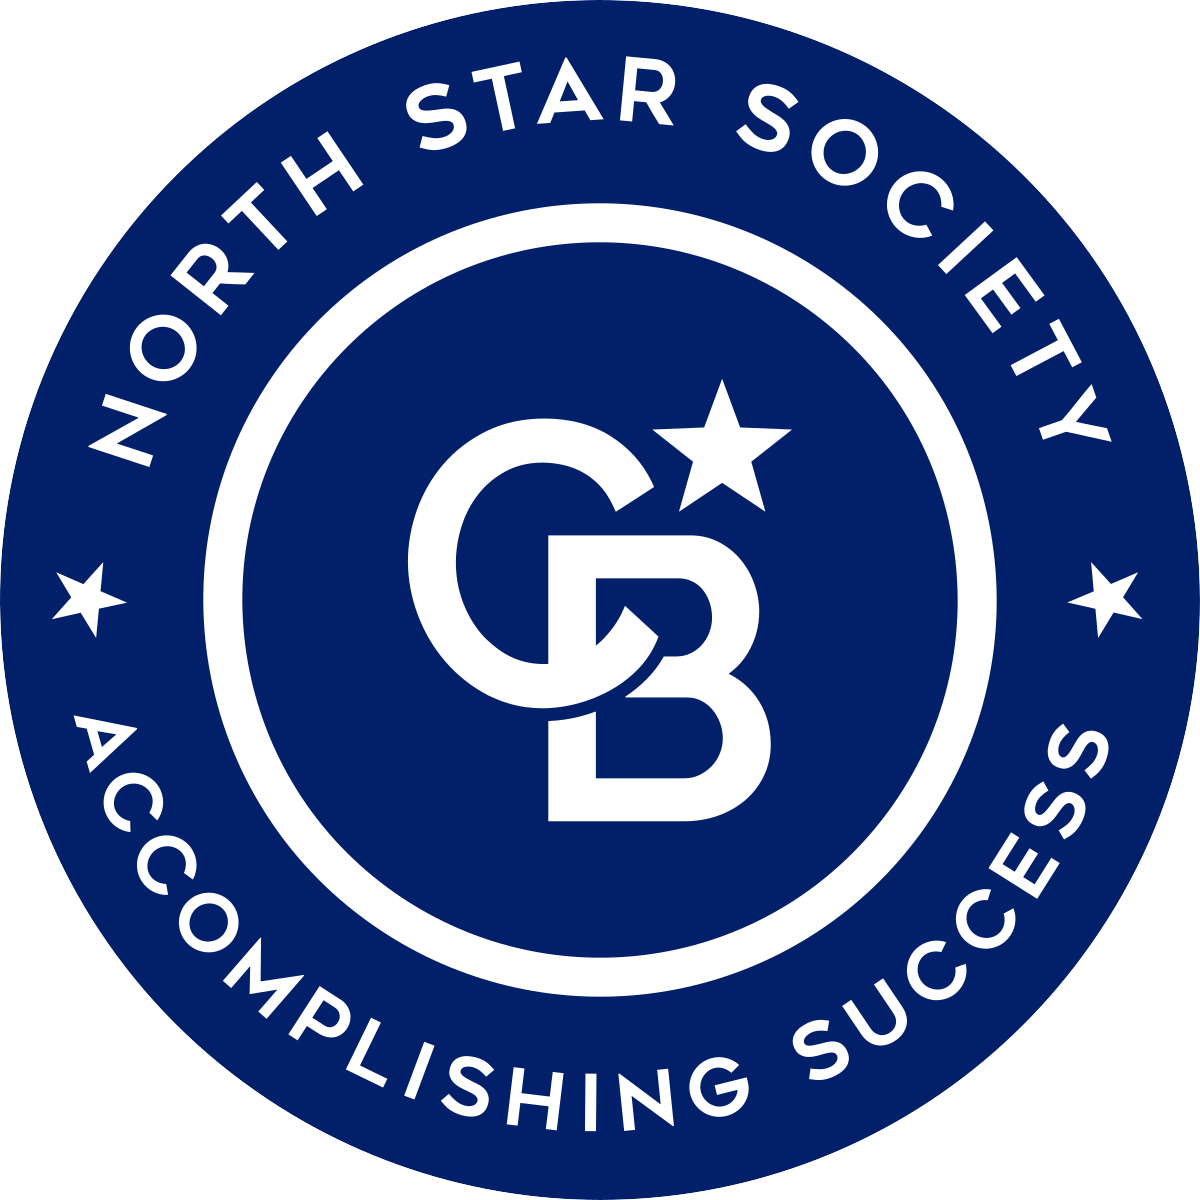 North Star Society 2021